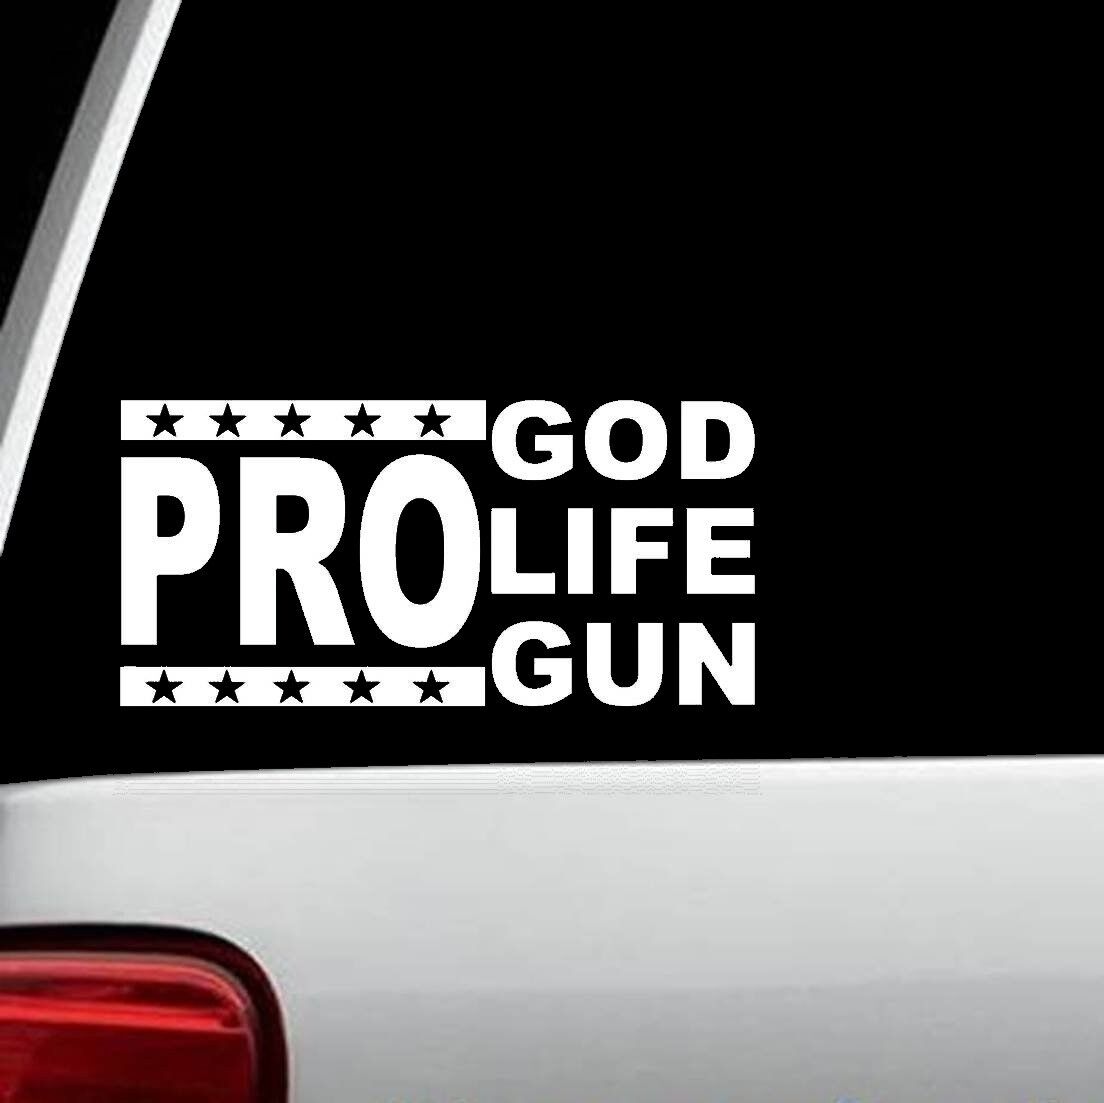 Pro God Pro Life Pro Gun Decal Sticker for Car Window F1028